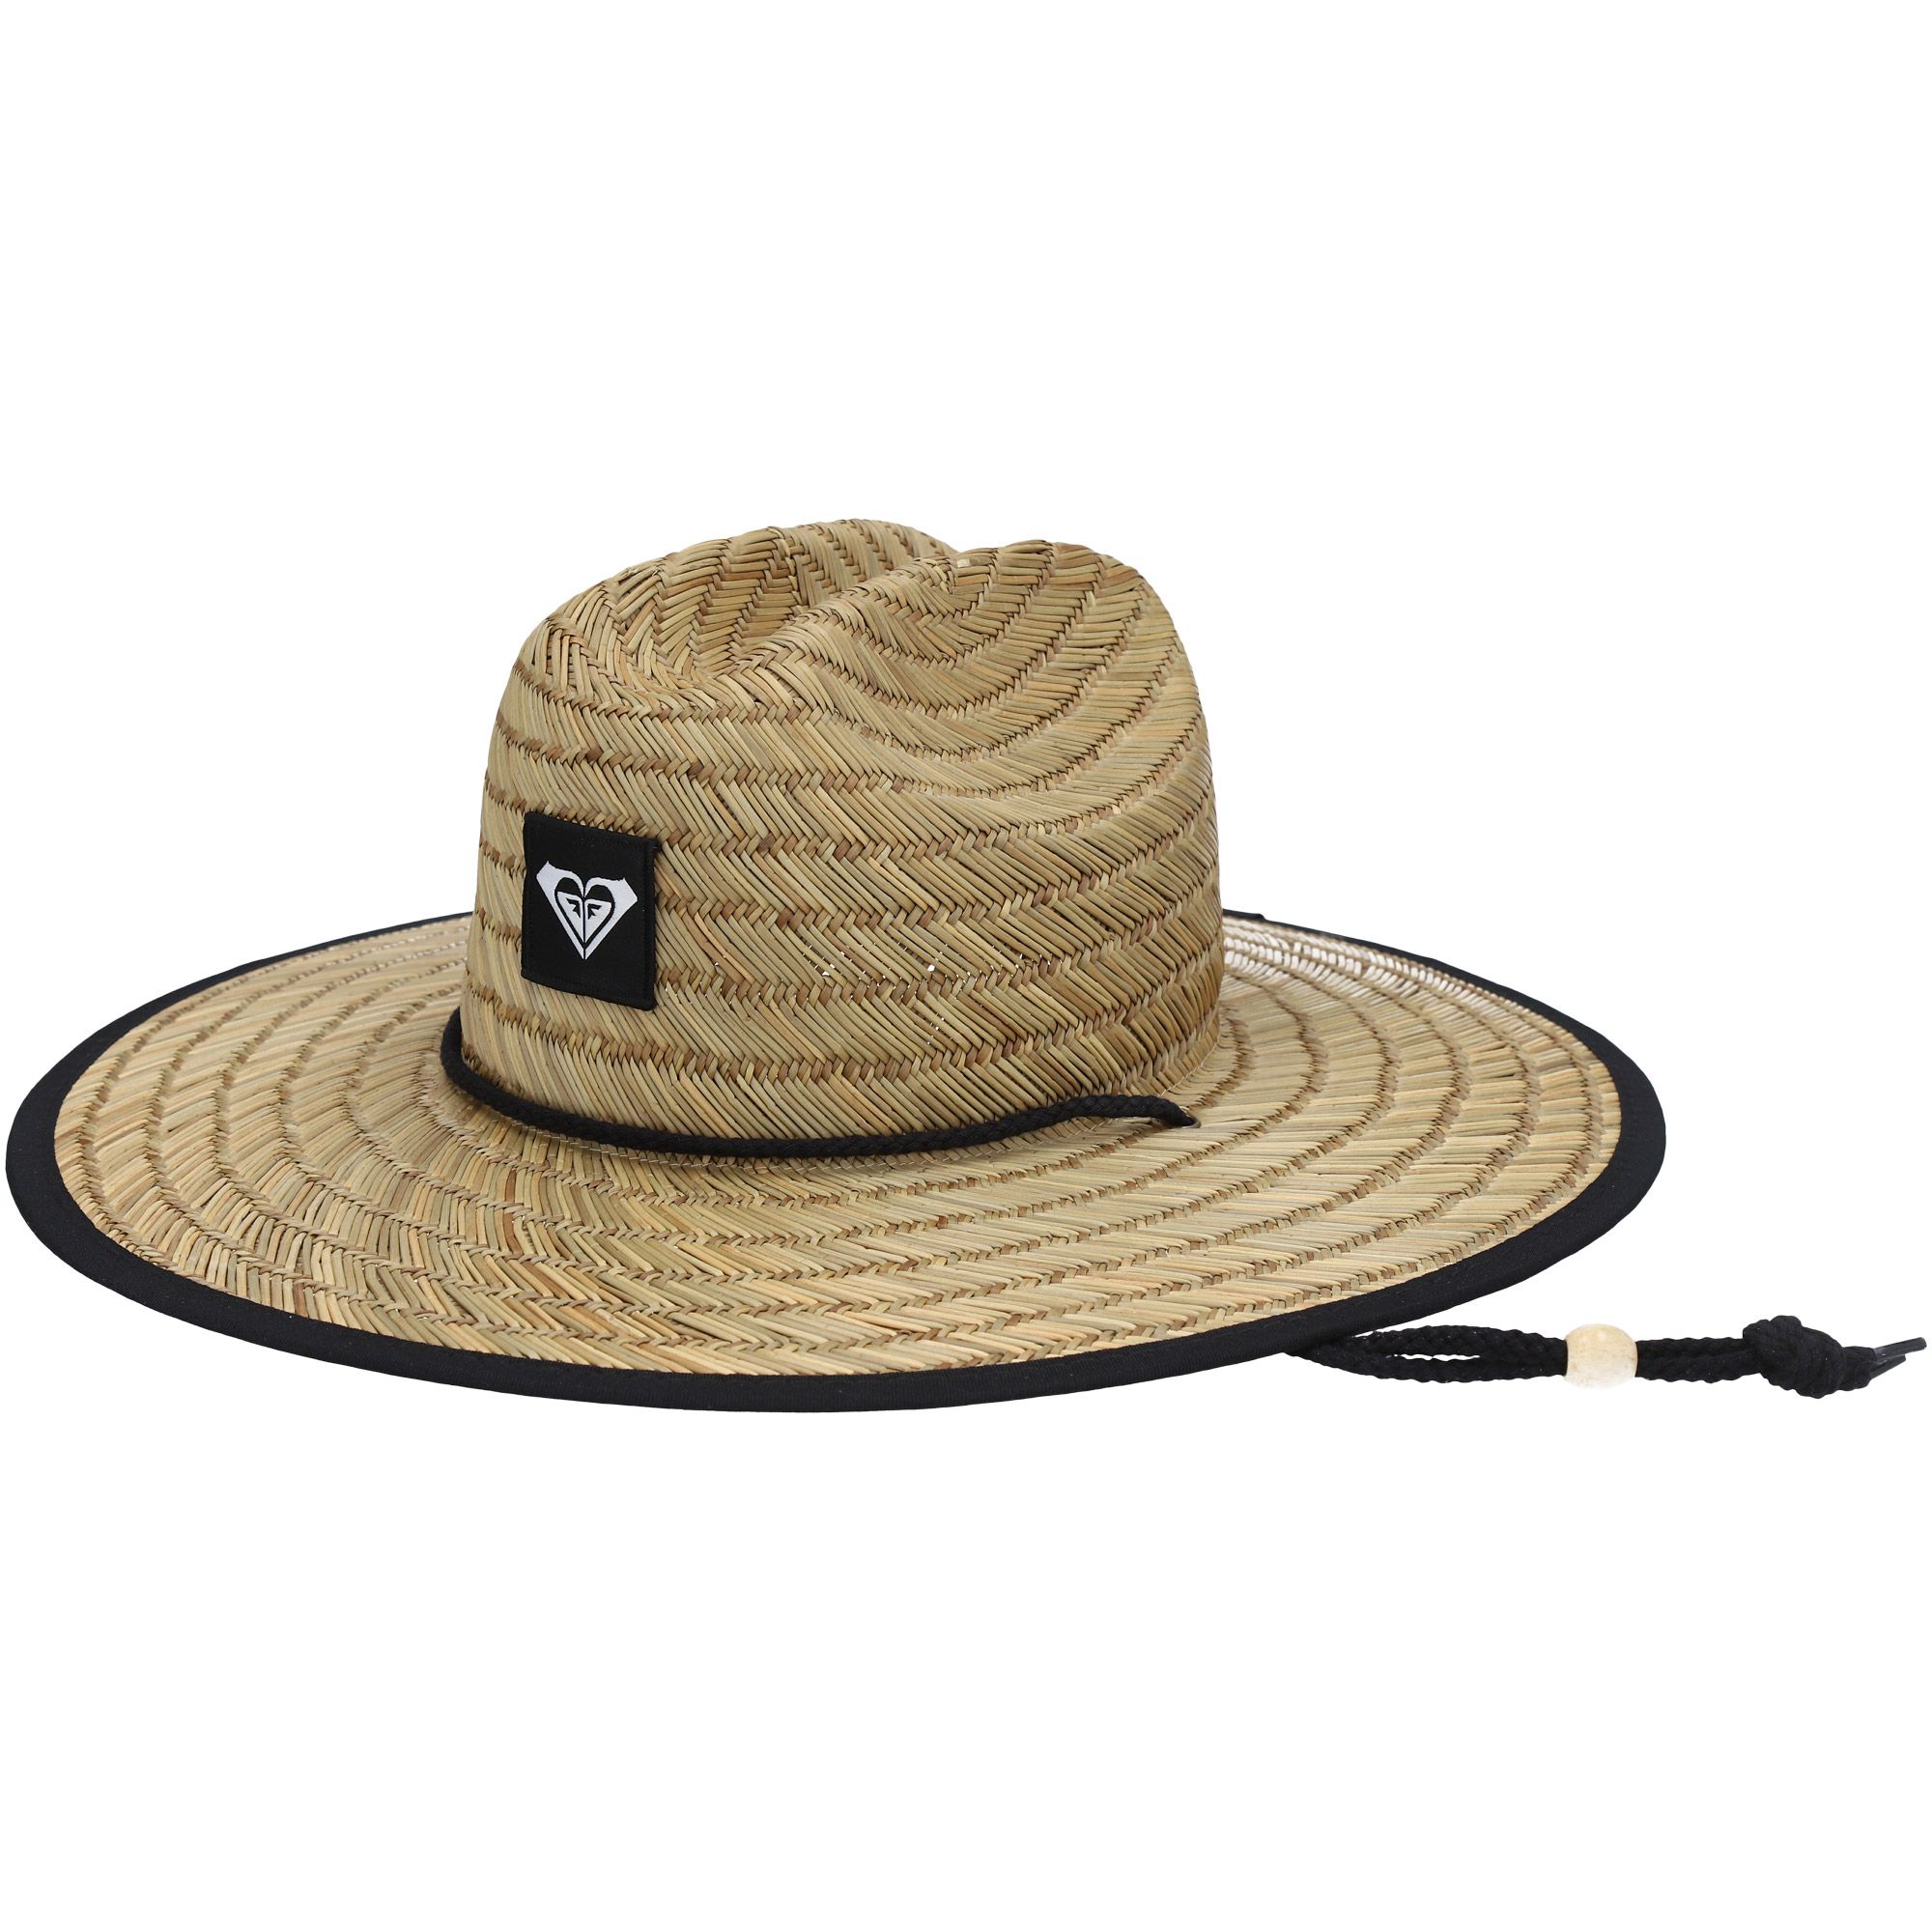 Roxy Women's Tomboy 2 Straw Hat – Natural | Fanatics